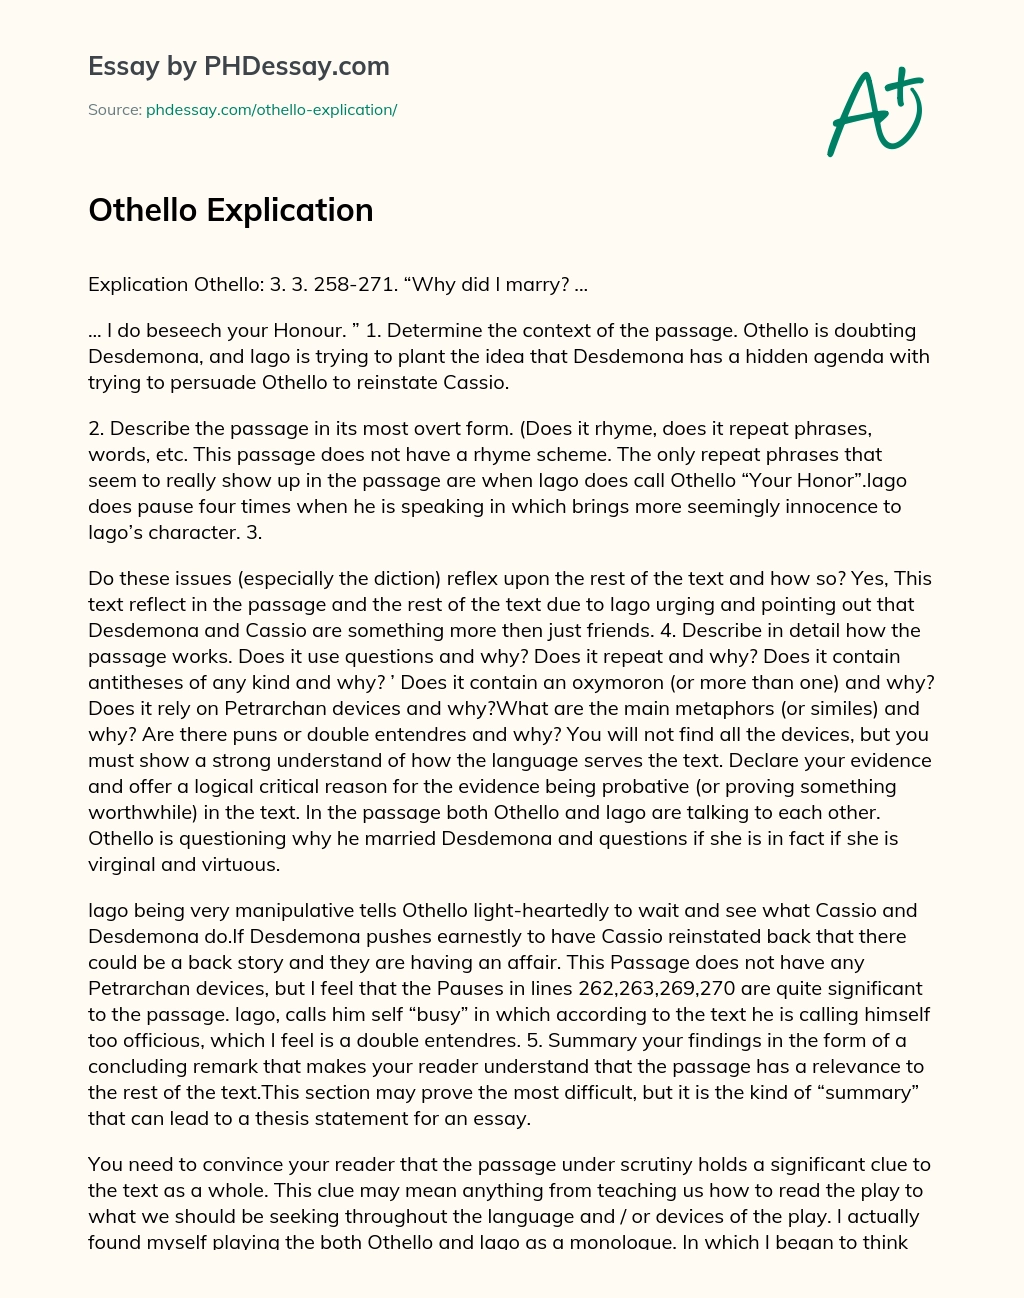 Othello Explication essay